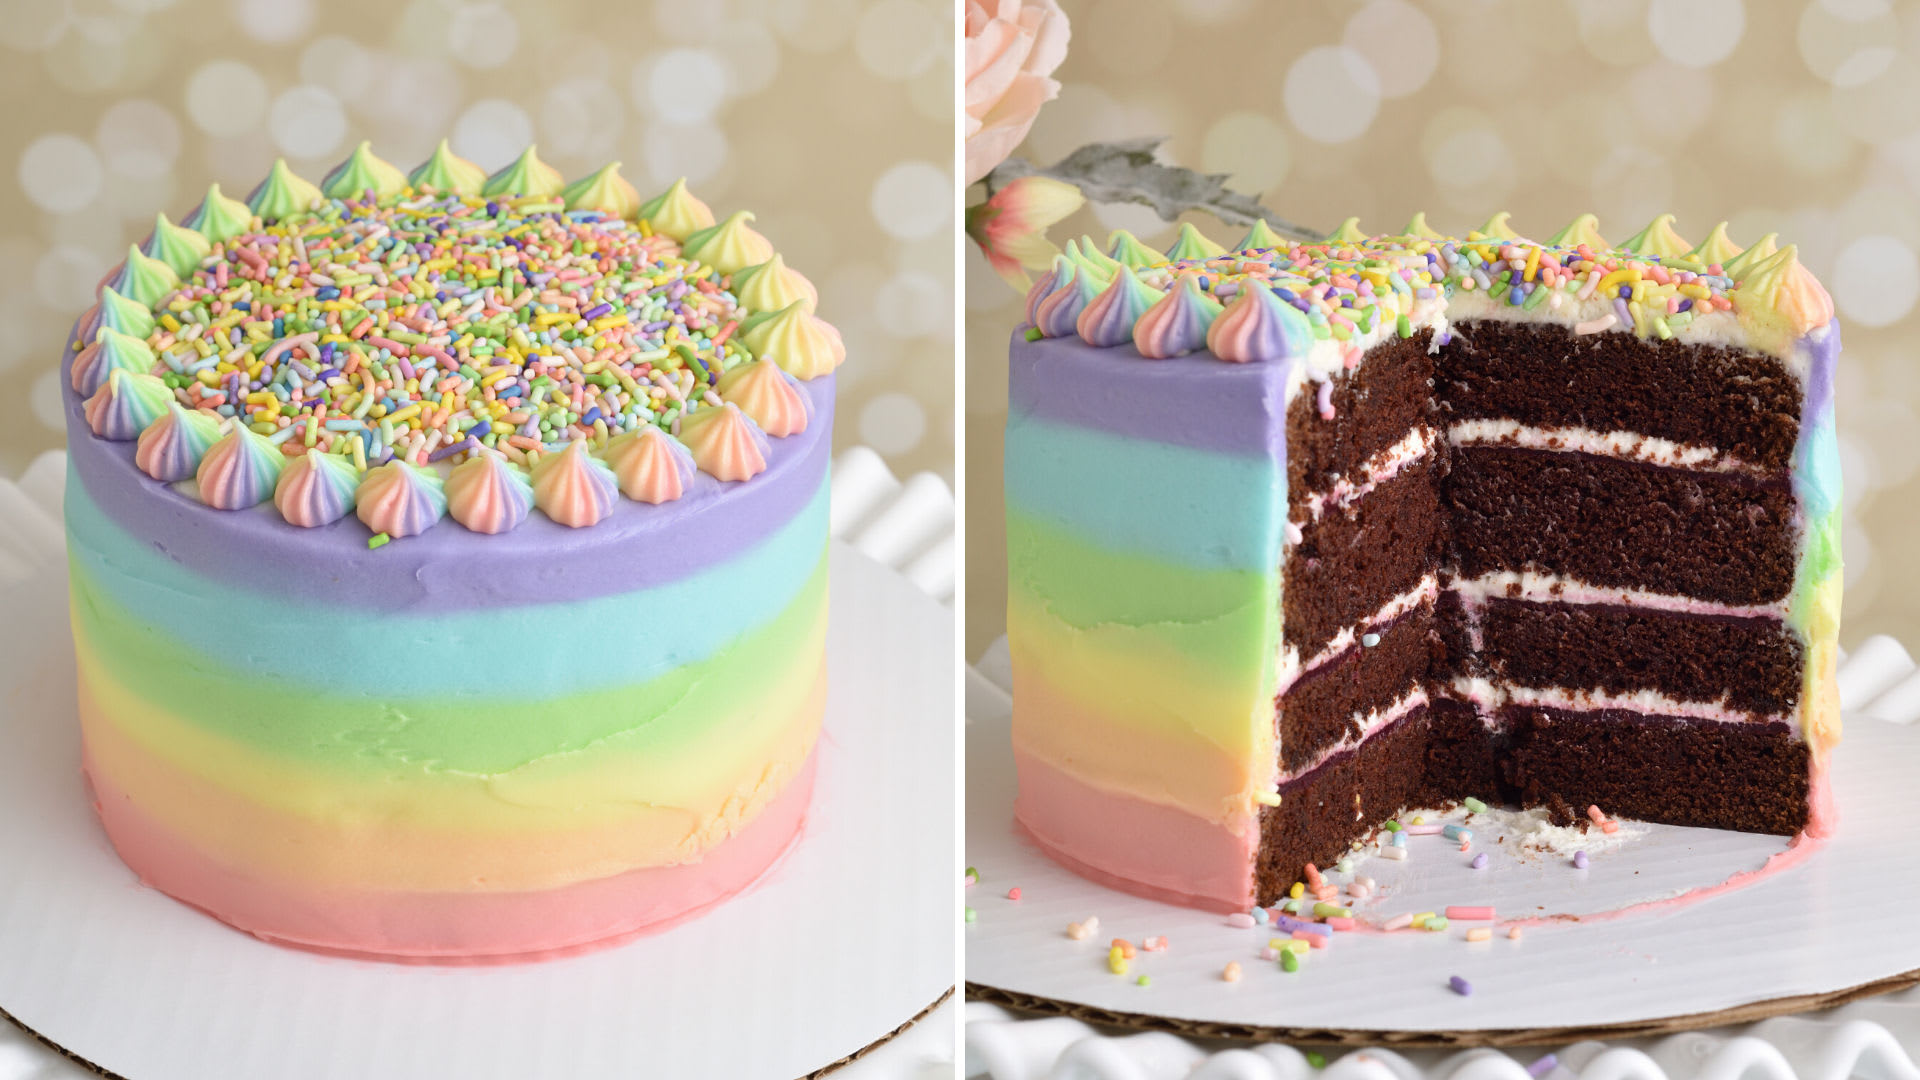 Fairy Creamy Rainbow Cake | Winni.in